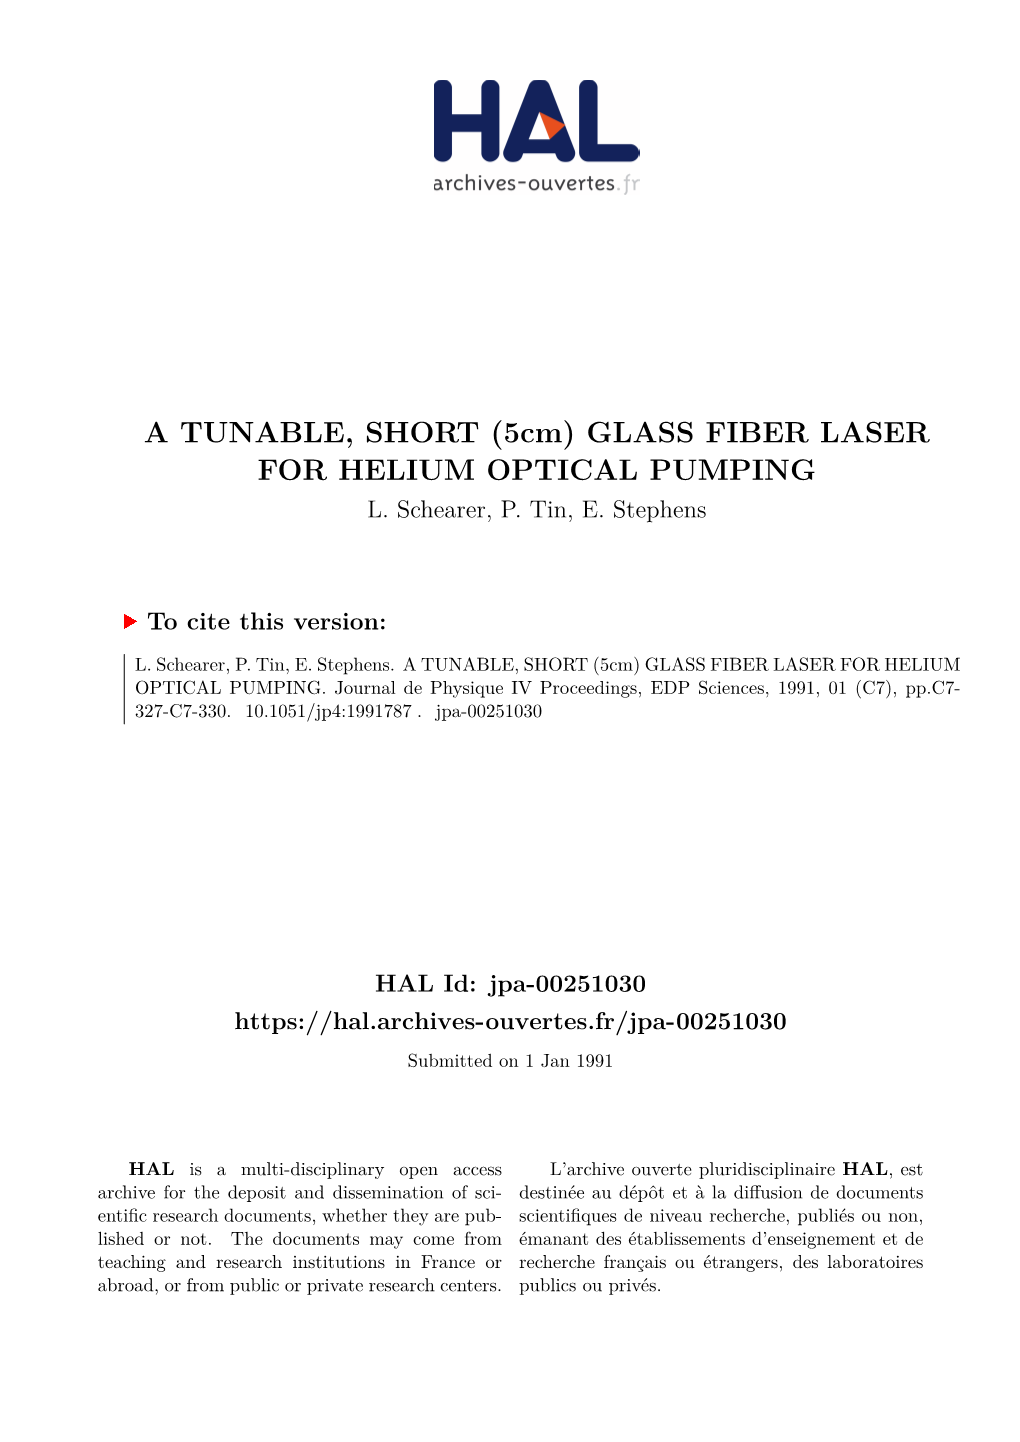 Glass Fiber Laser for Helium Optical Pumping L